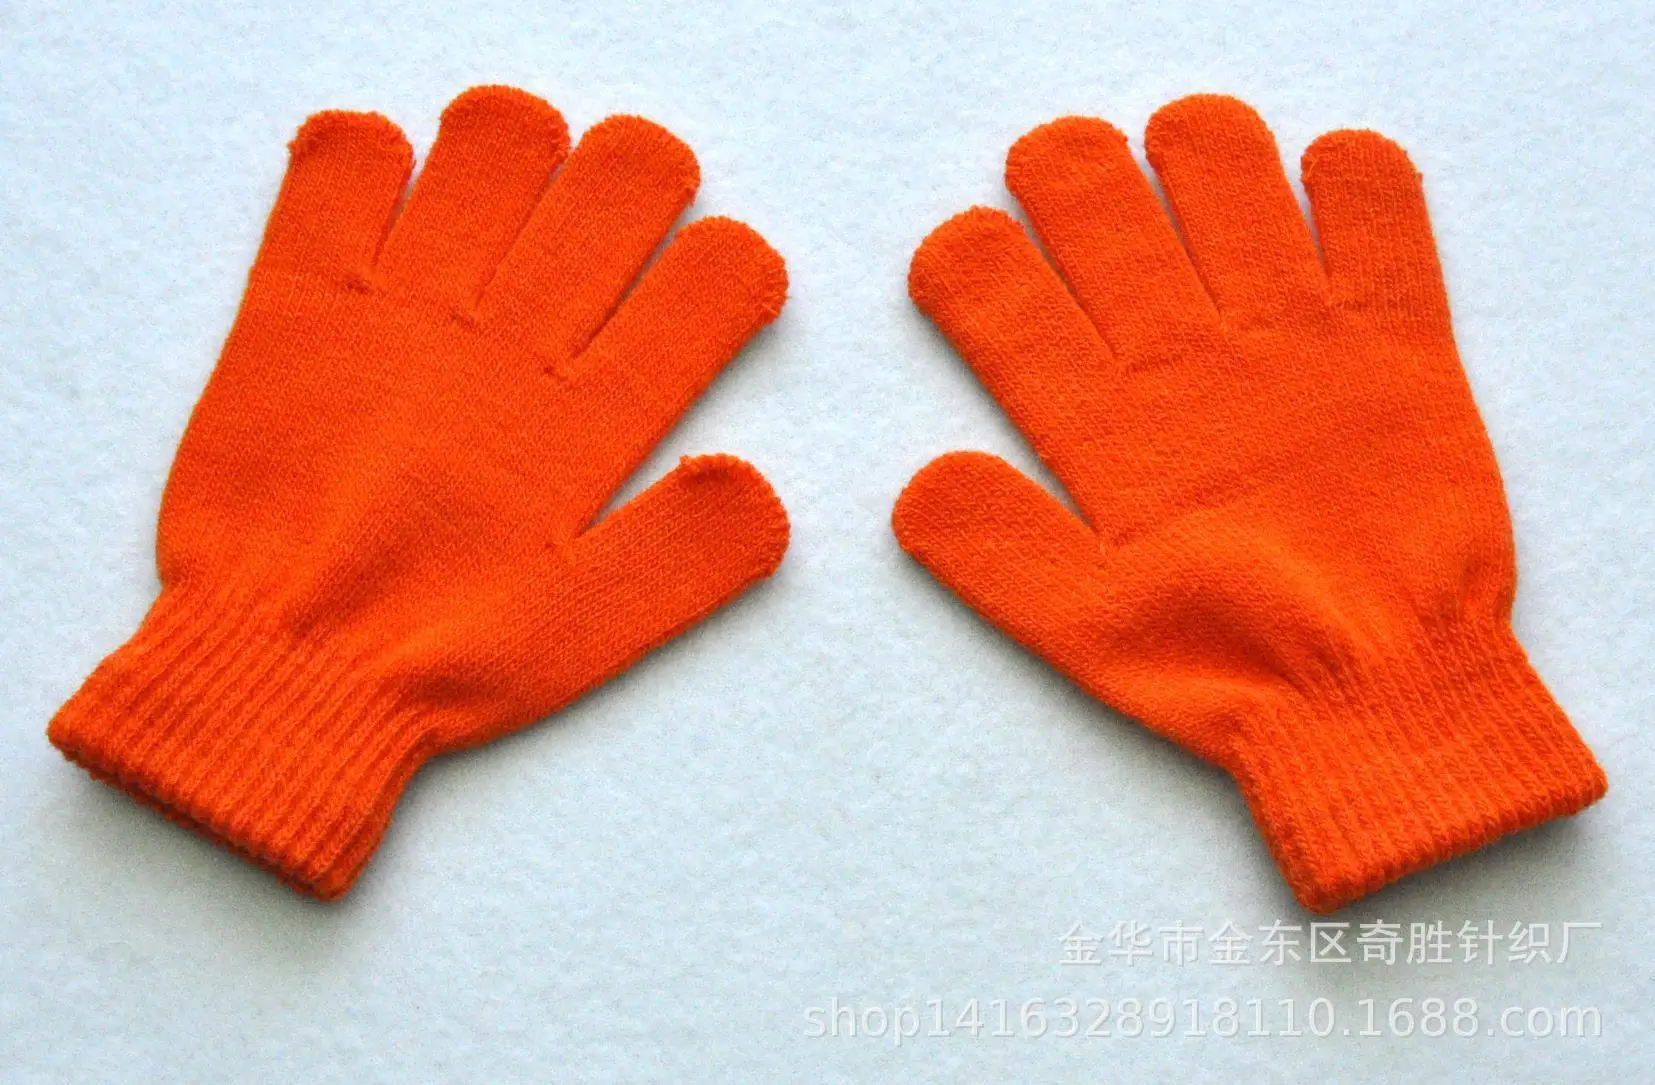 1 Pair Lytwtw's Anti-grasping Warm Winter Gloves Kids Protection Baby Mitten Cute Unisex Girls Boy Newborn Love Face Mittens baby accessories store near me	